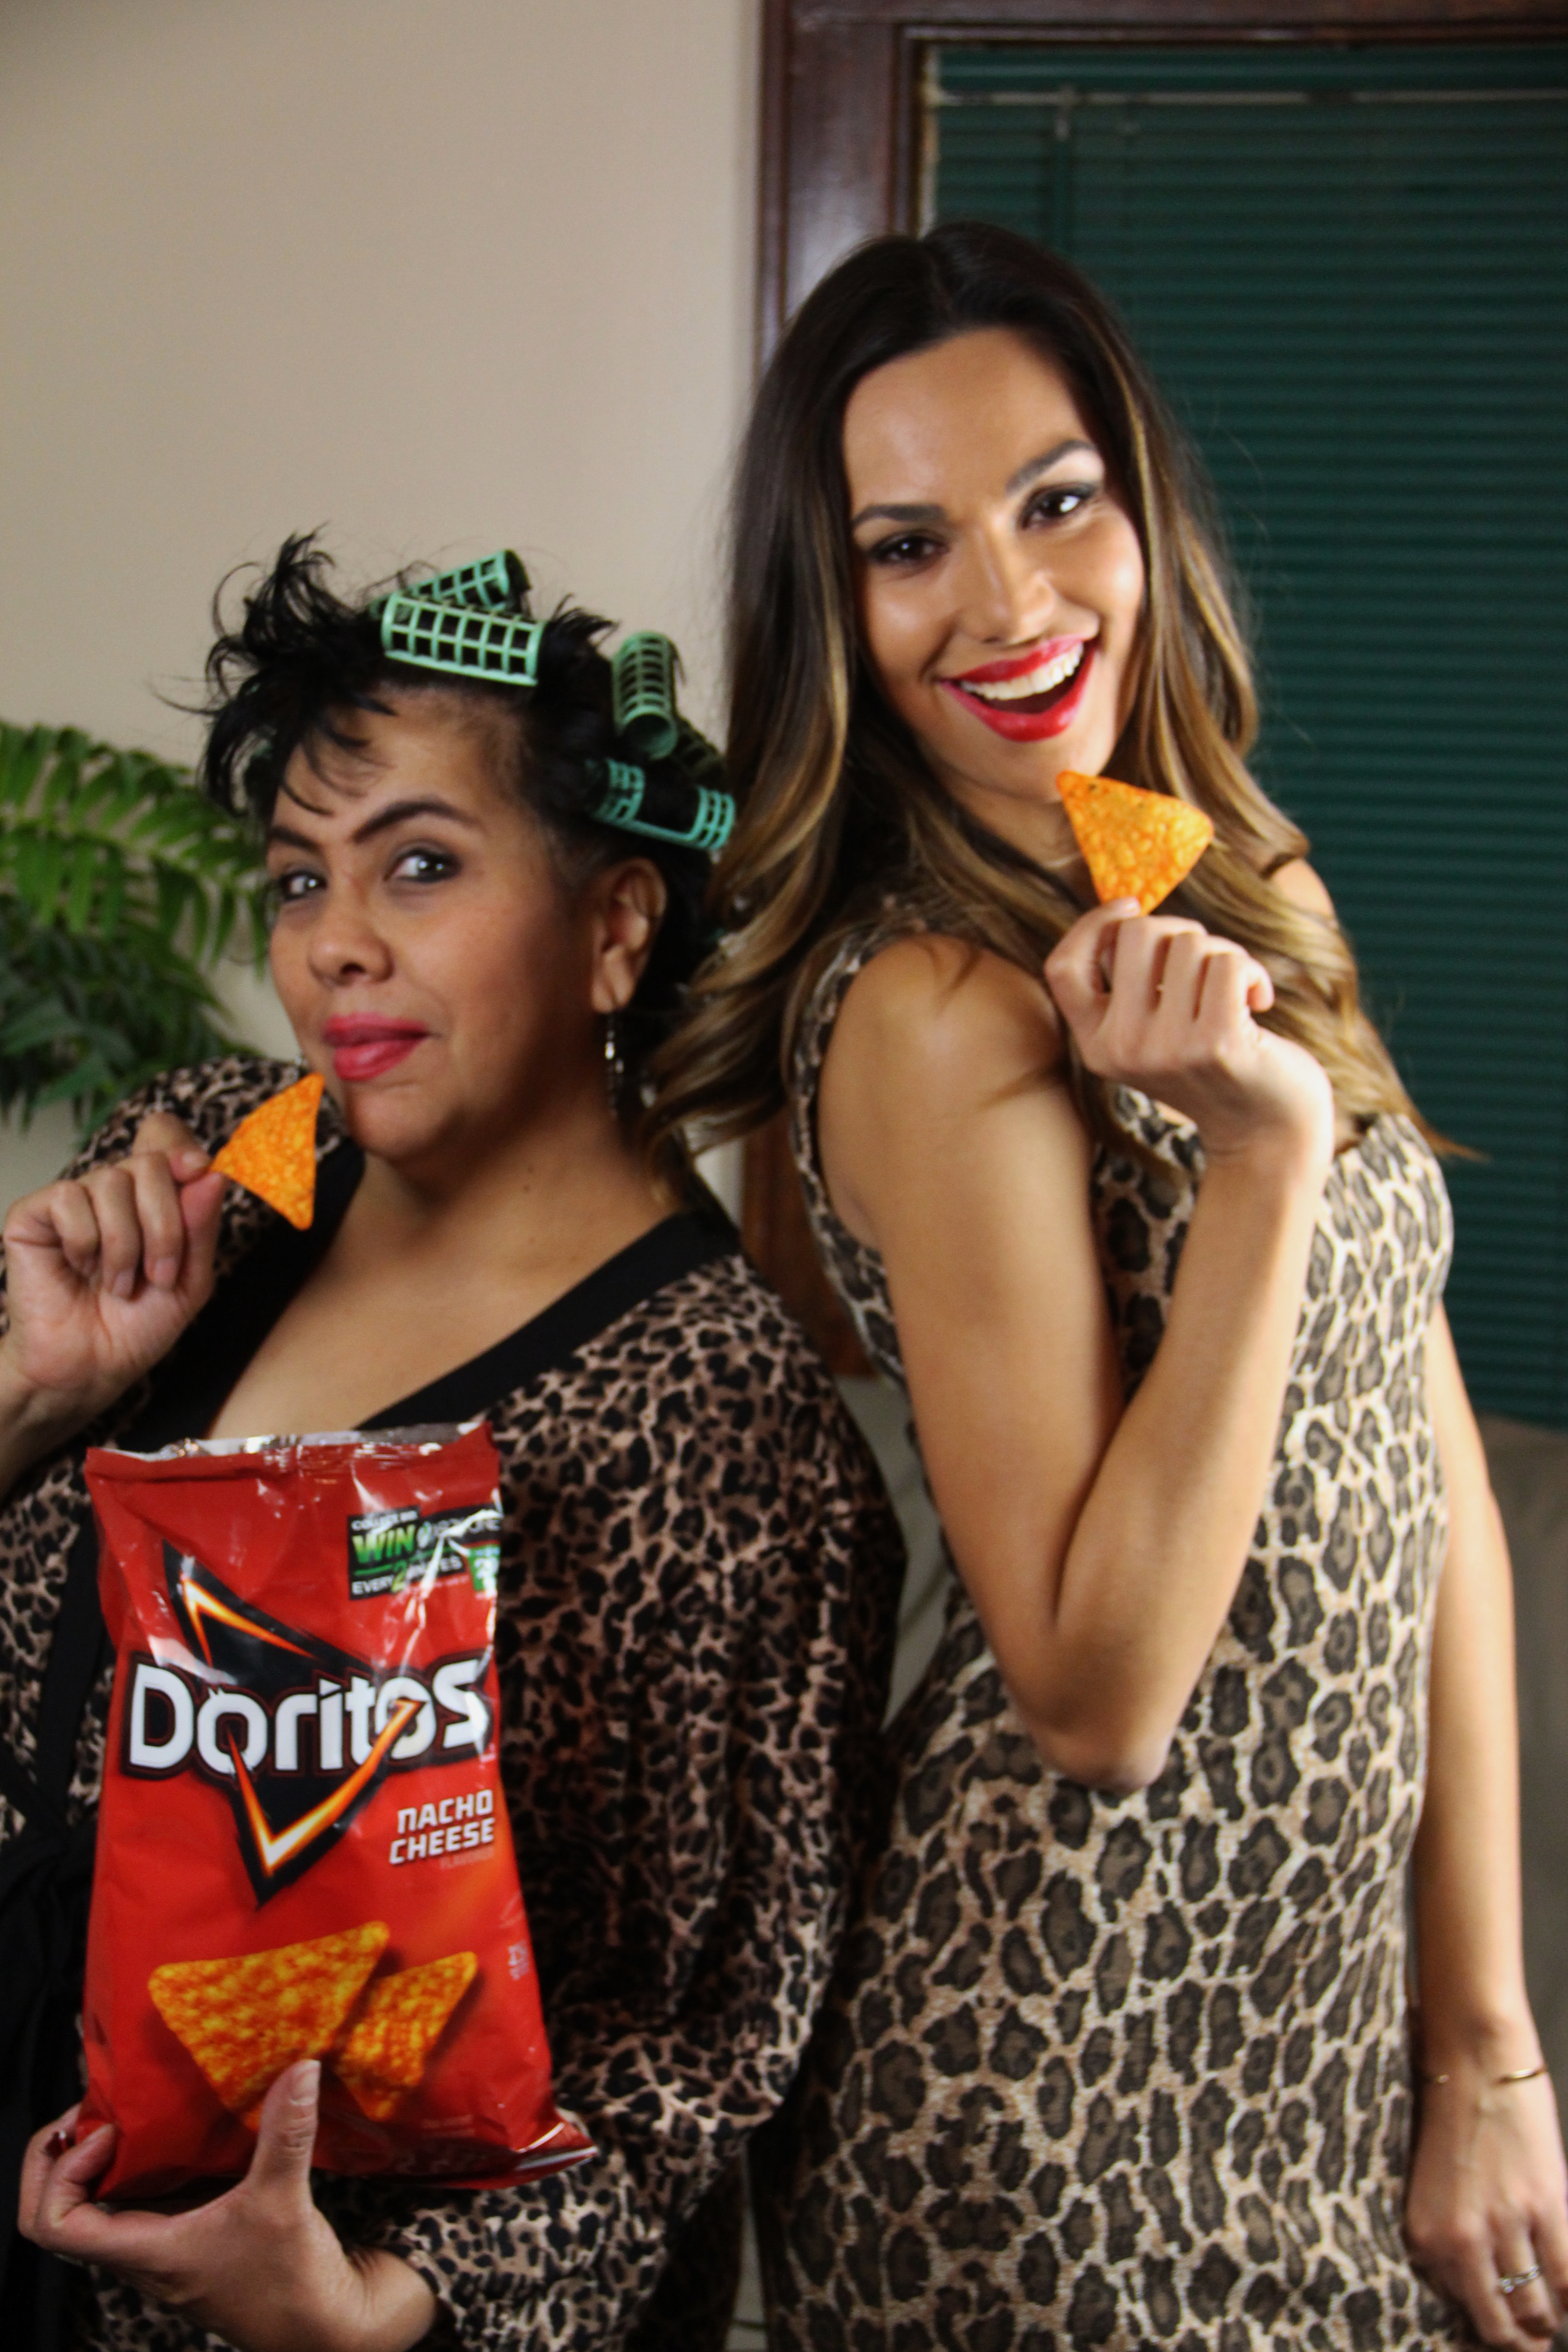 Reality vs. Fantasy - Promo Shots for Doritos Super Bowl 2014 Commercial Contest